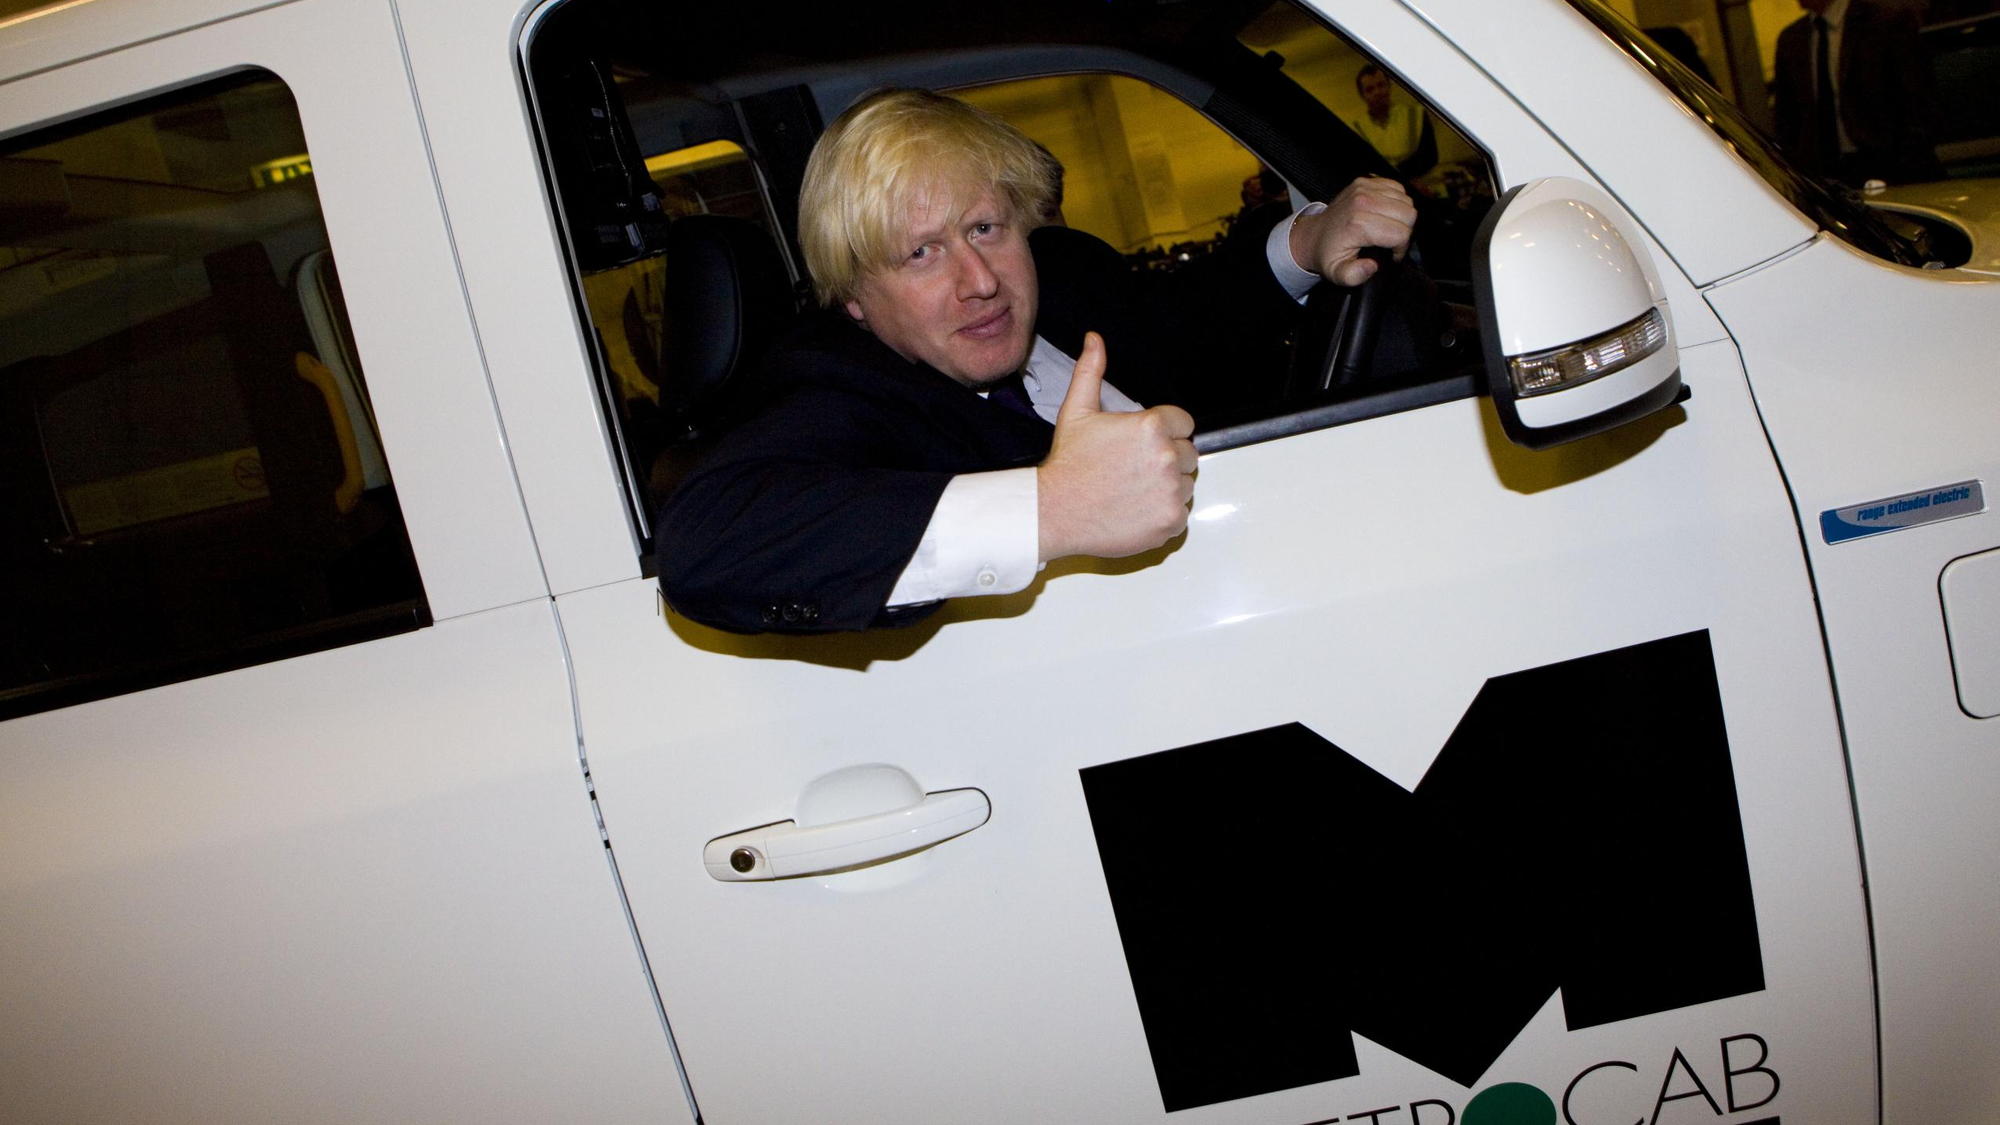 Metrocab range-extended London taxi unveiled by Boris Johnson